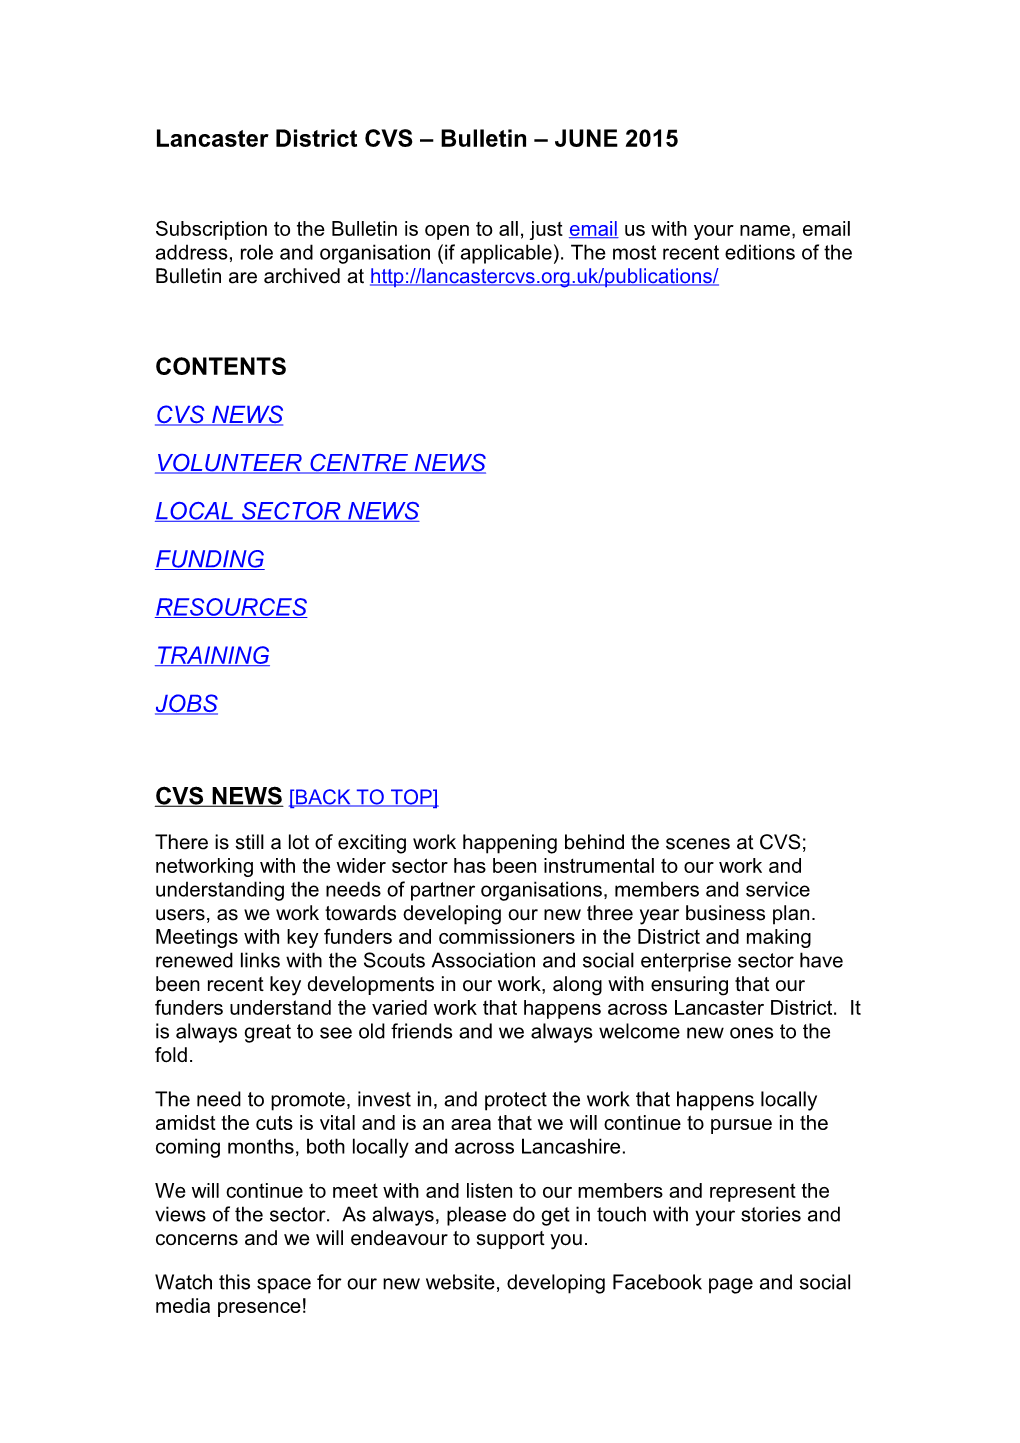 Lancaster District CVS Bulletin 2013